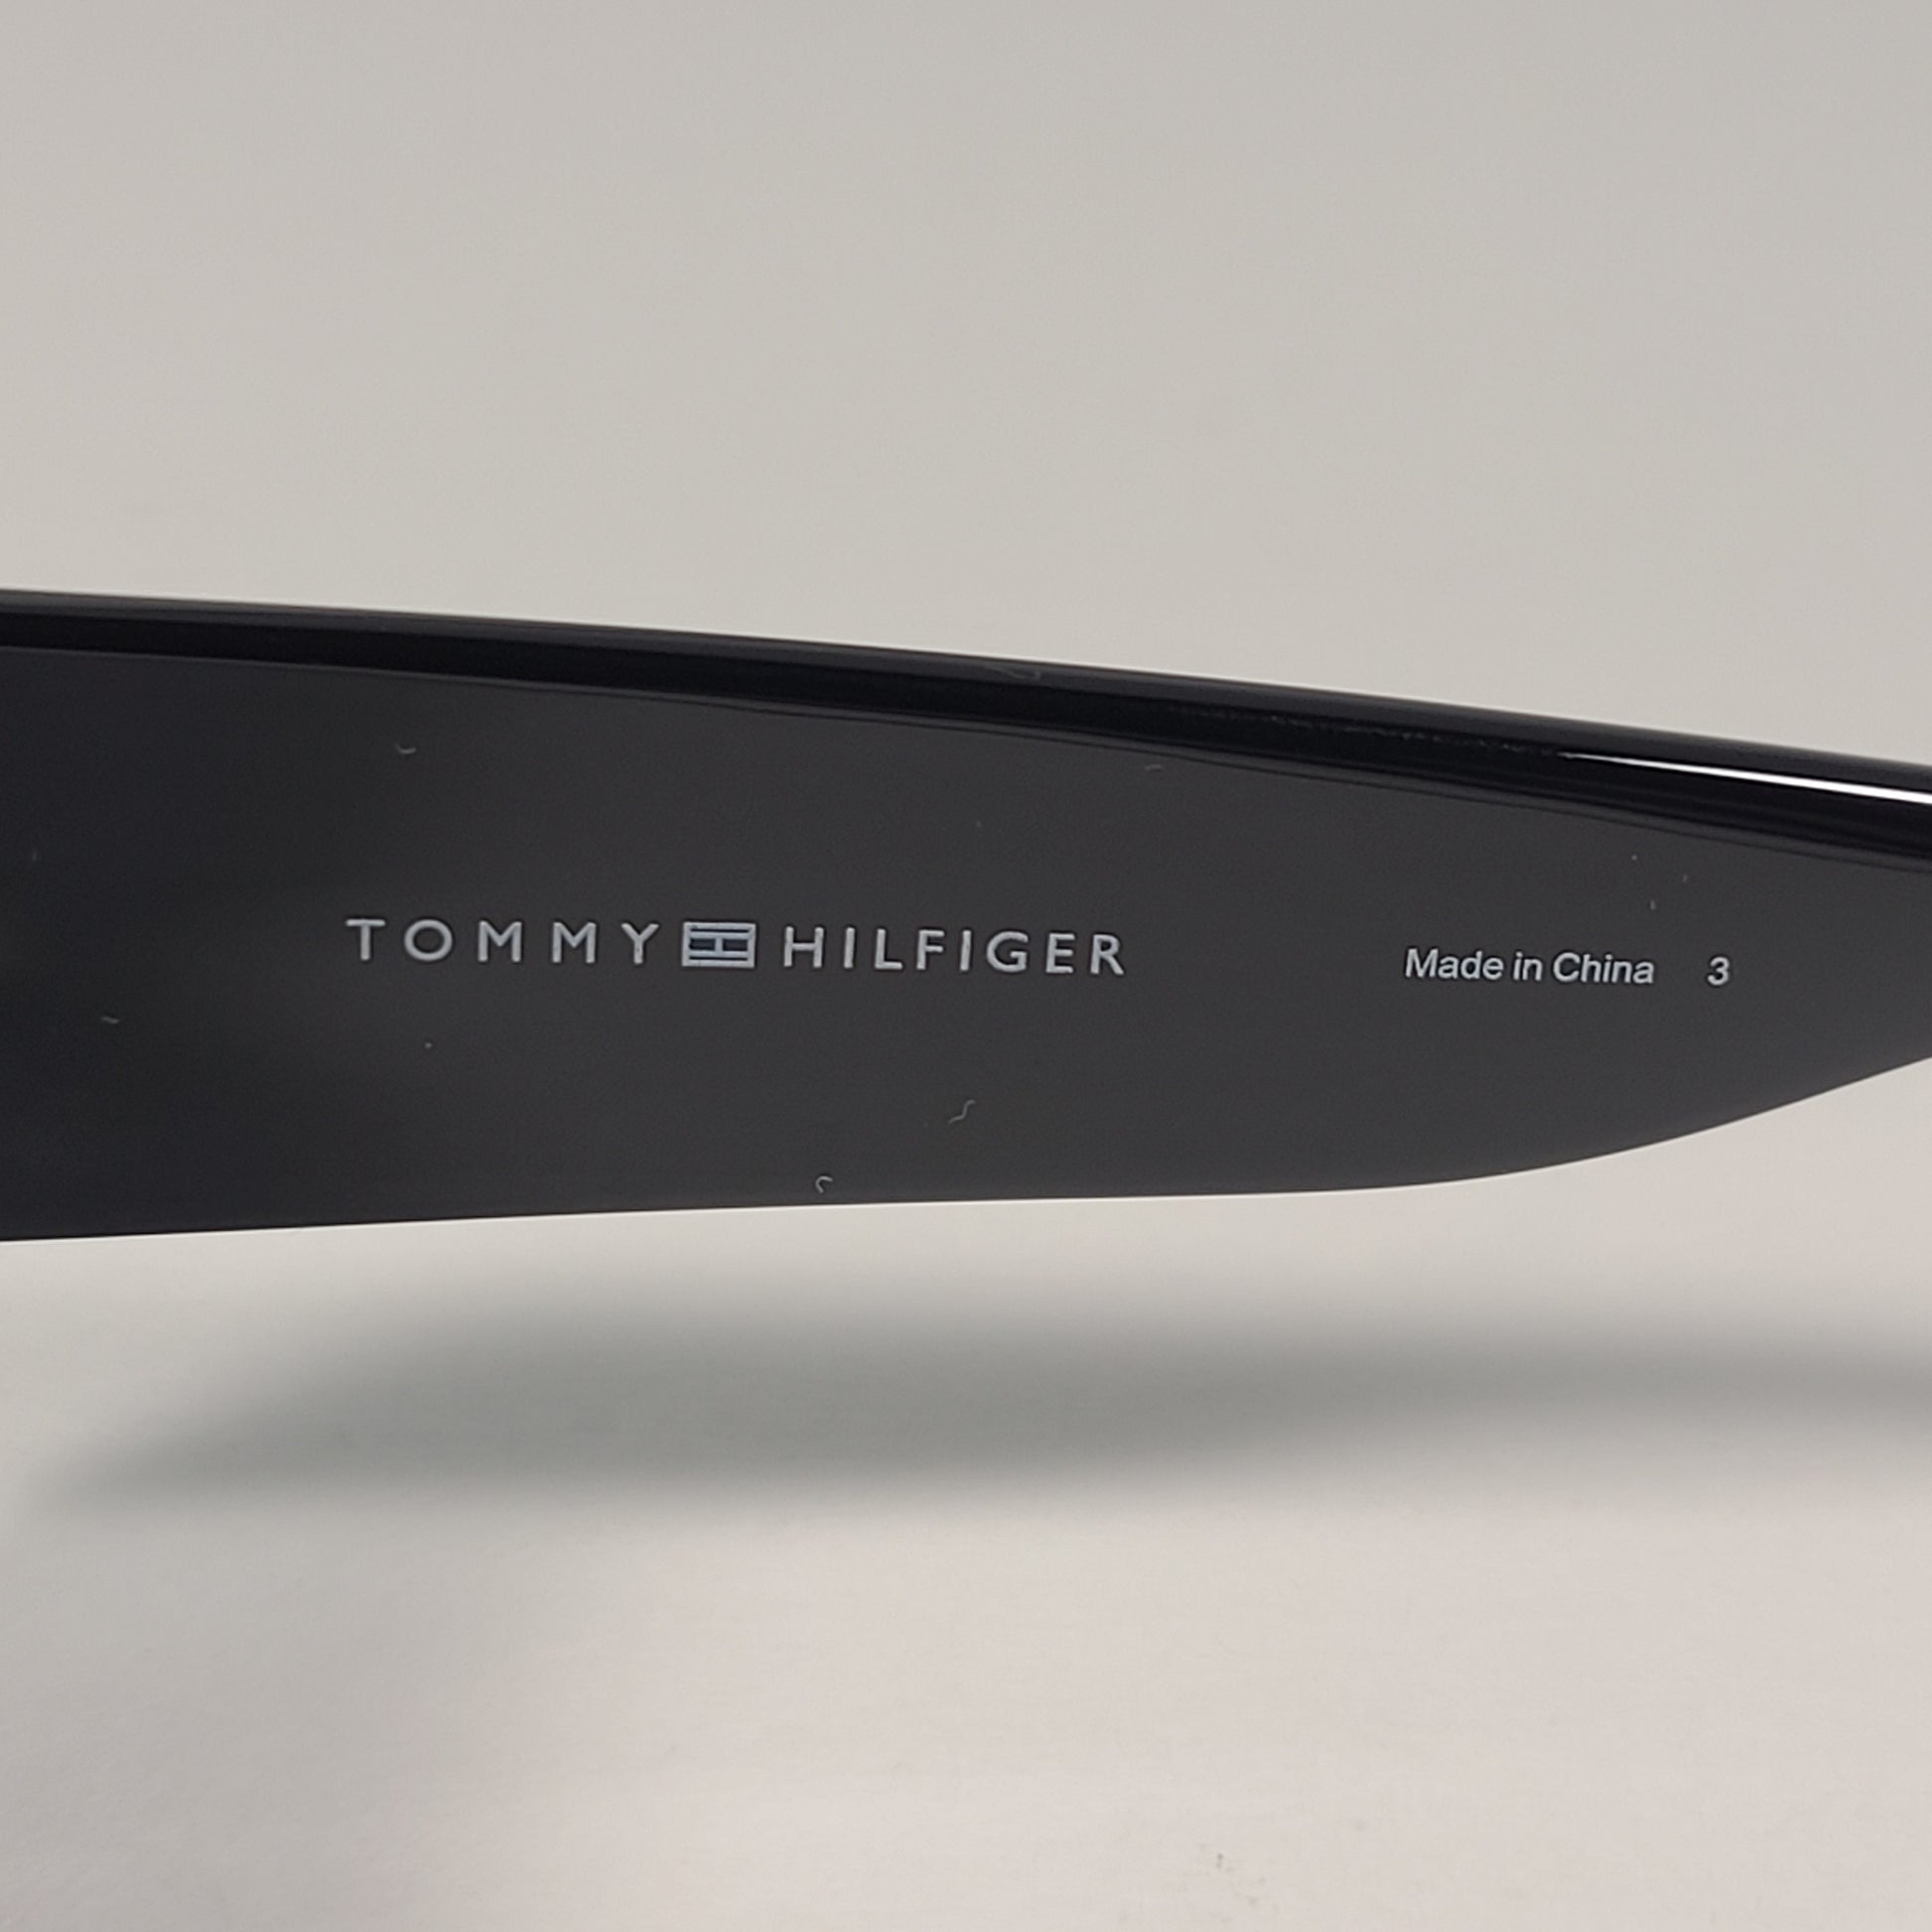 Tommy Hilfiger WP OL603 Large Oval Sunglasses Shiny Black Frame Gray Tinted Lens - Sunglasses